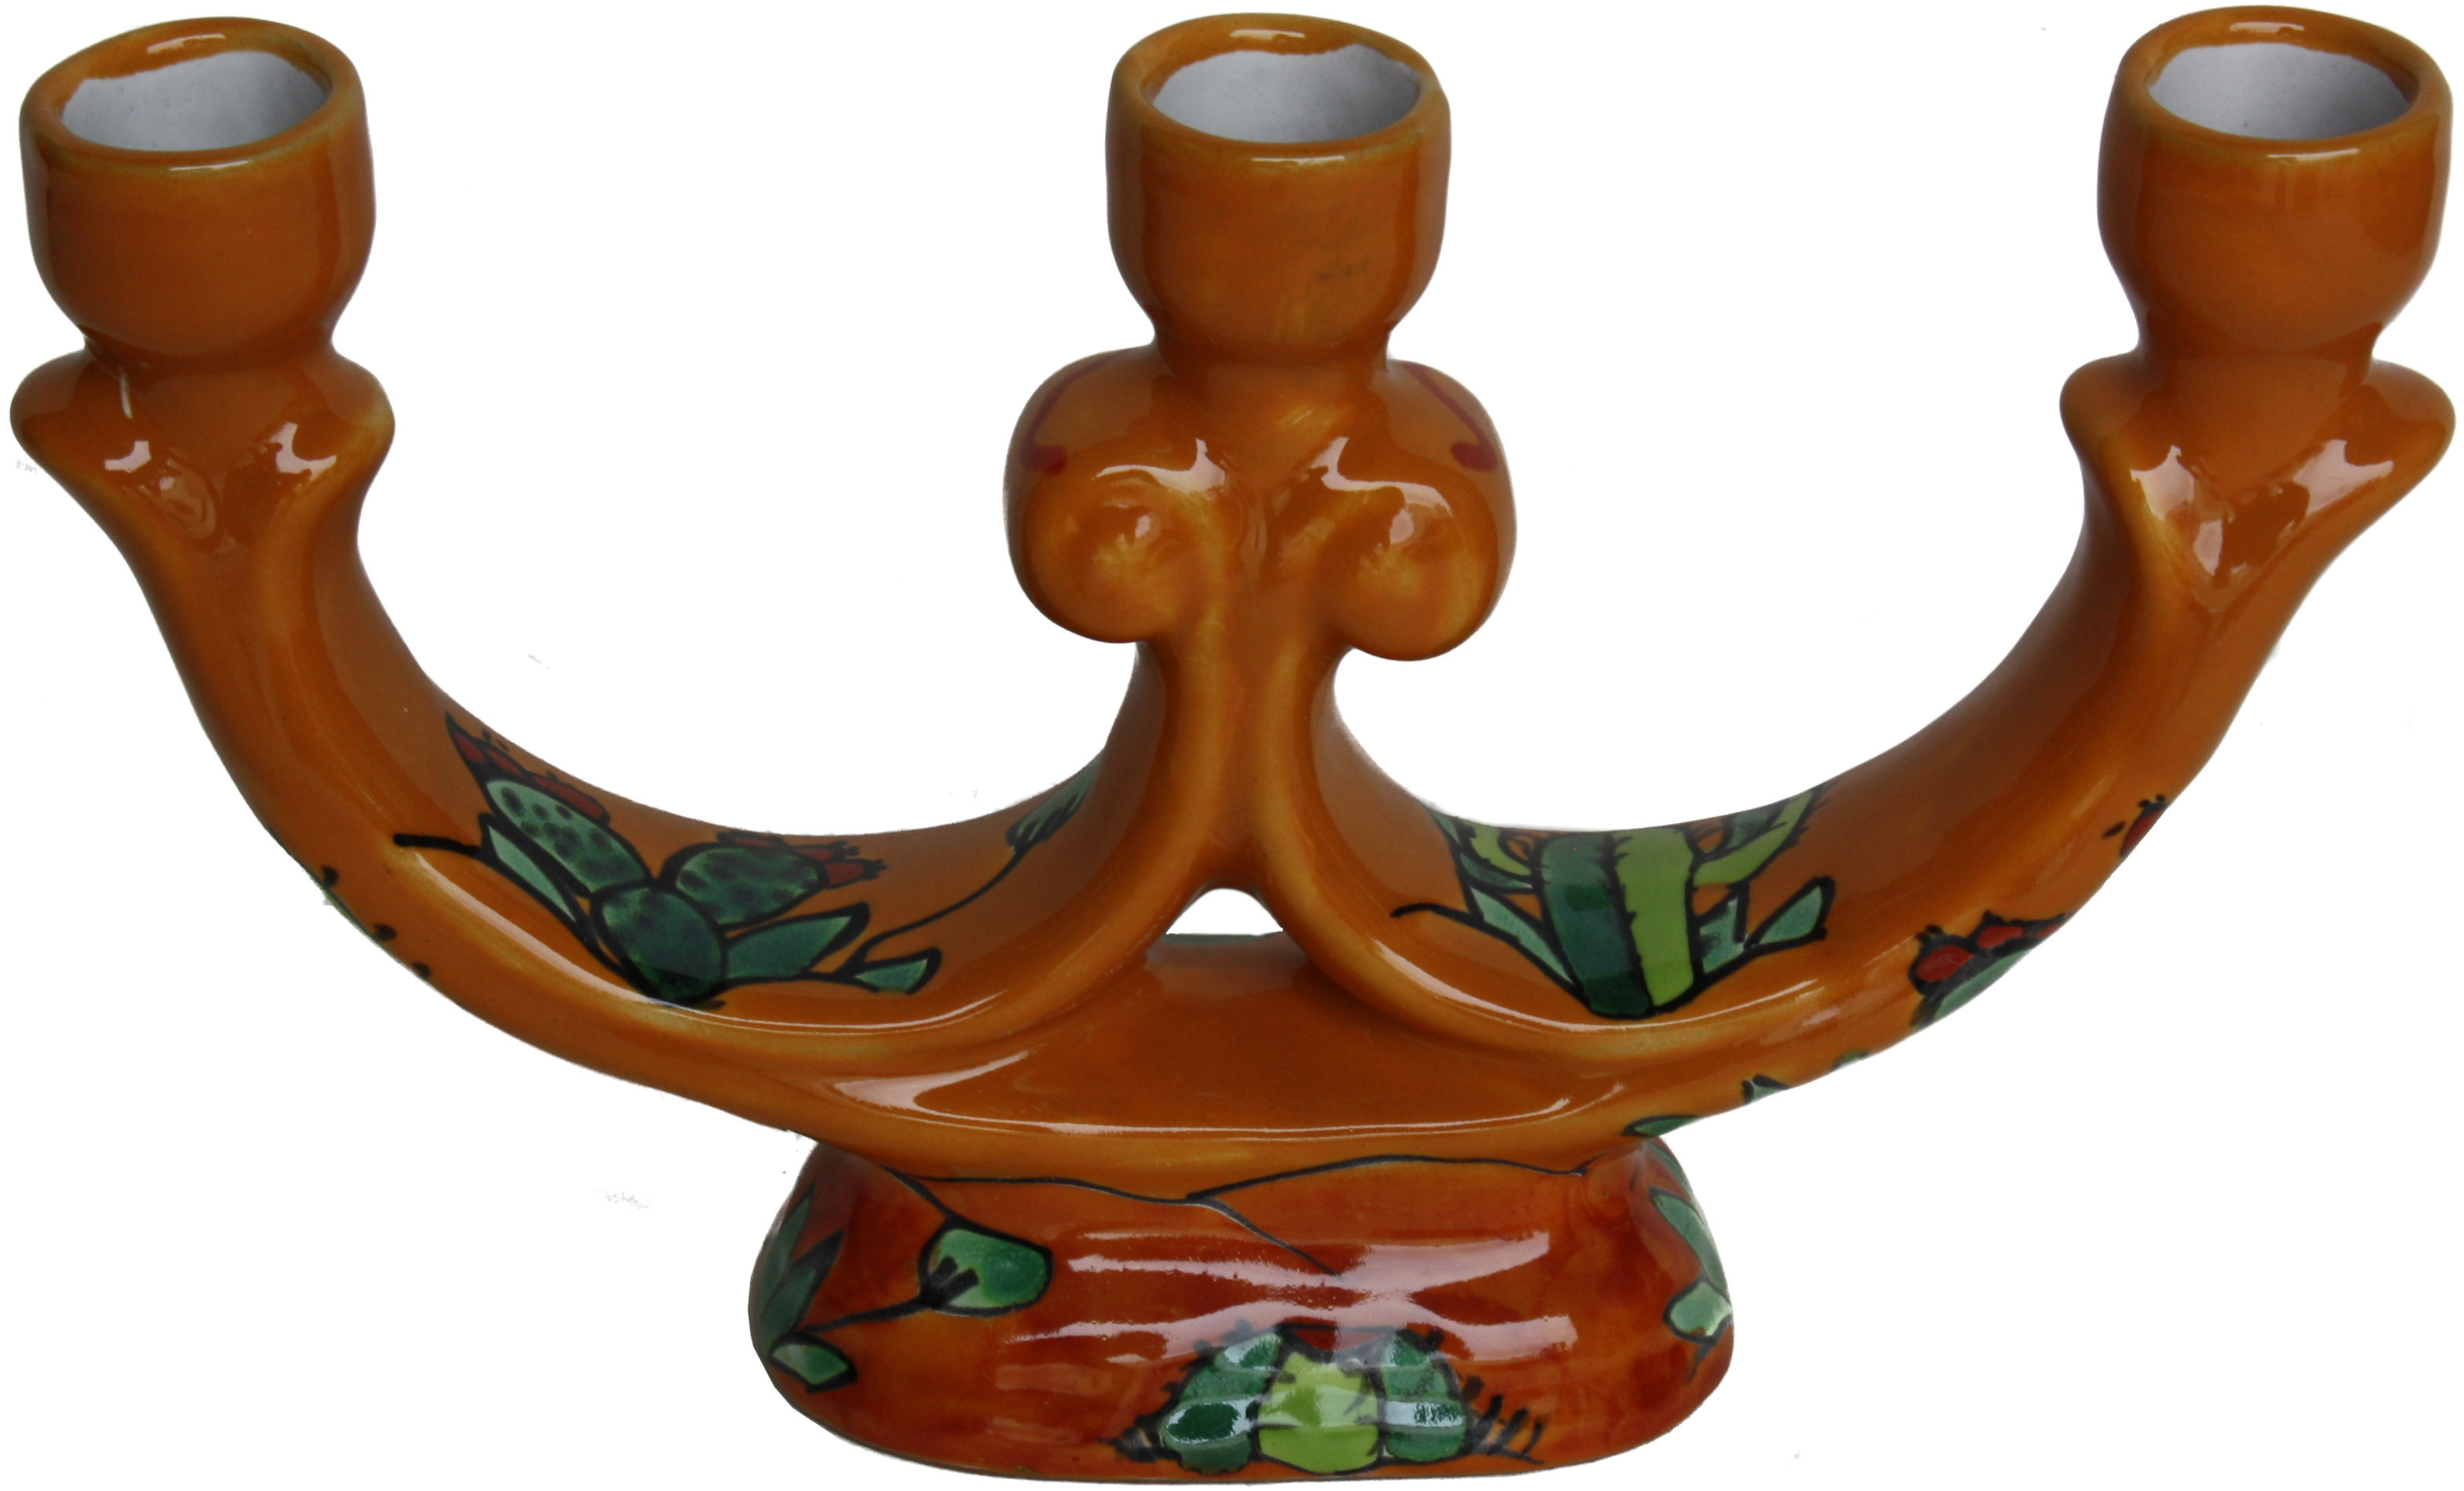 Desert Talavera Ceramic Candle Holder